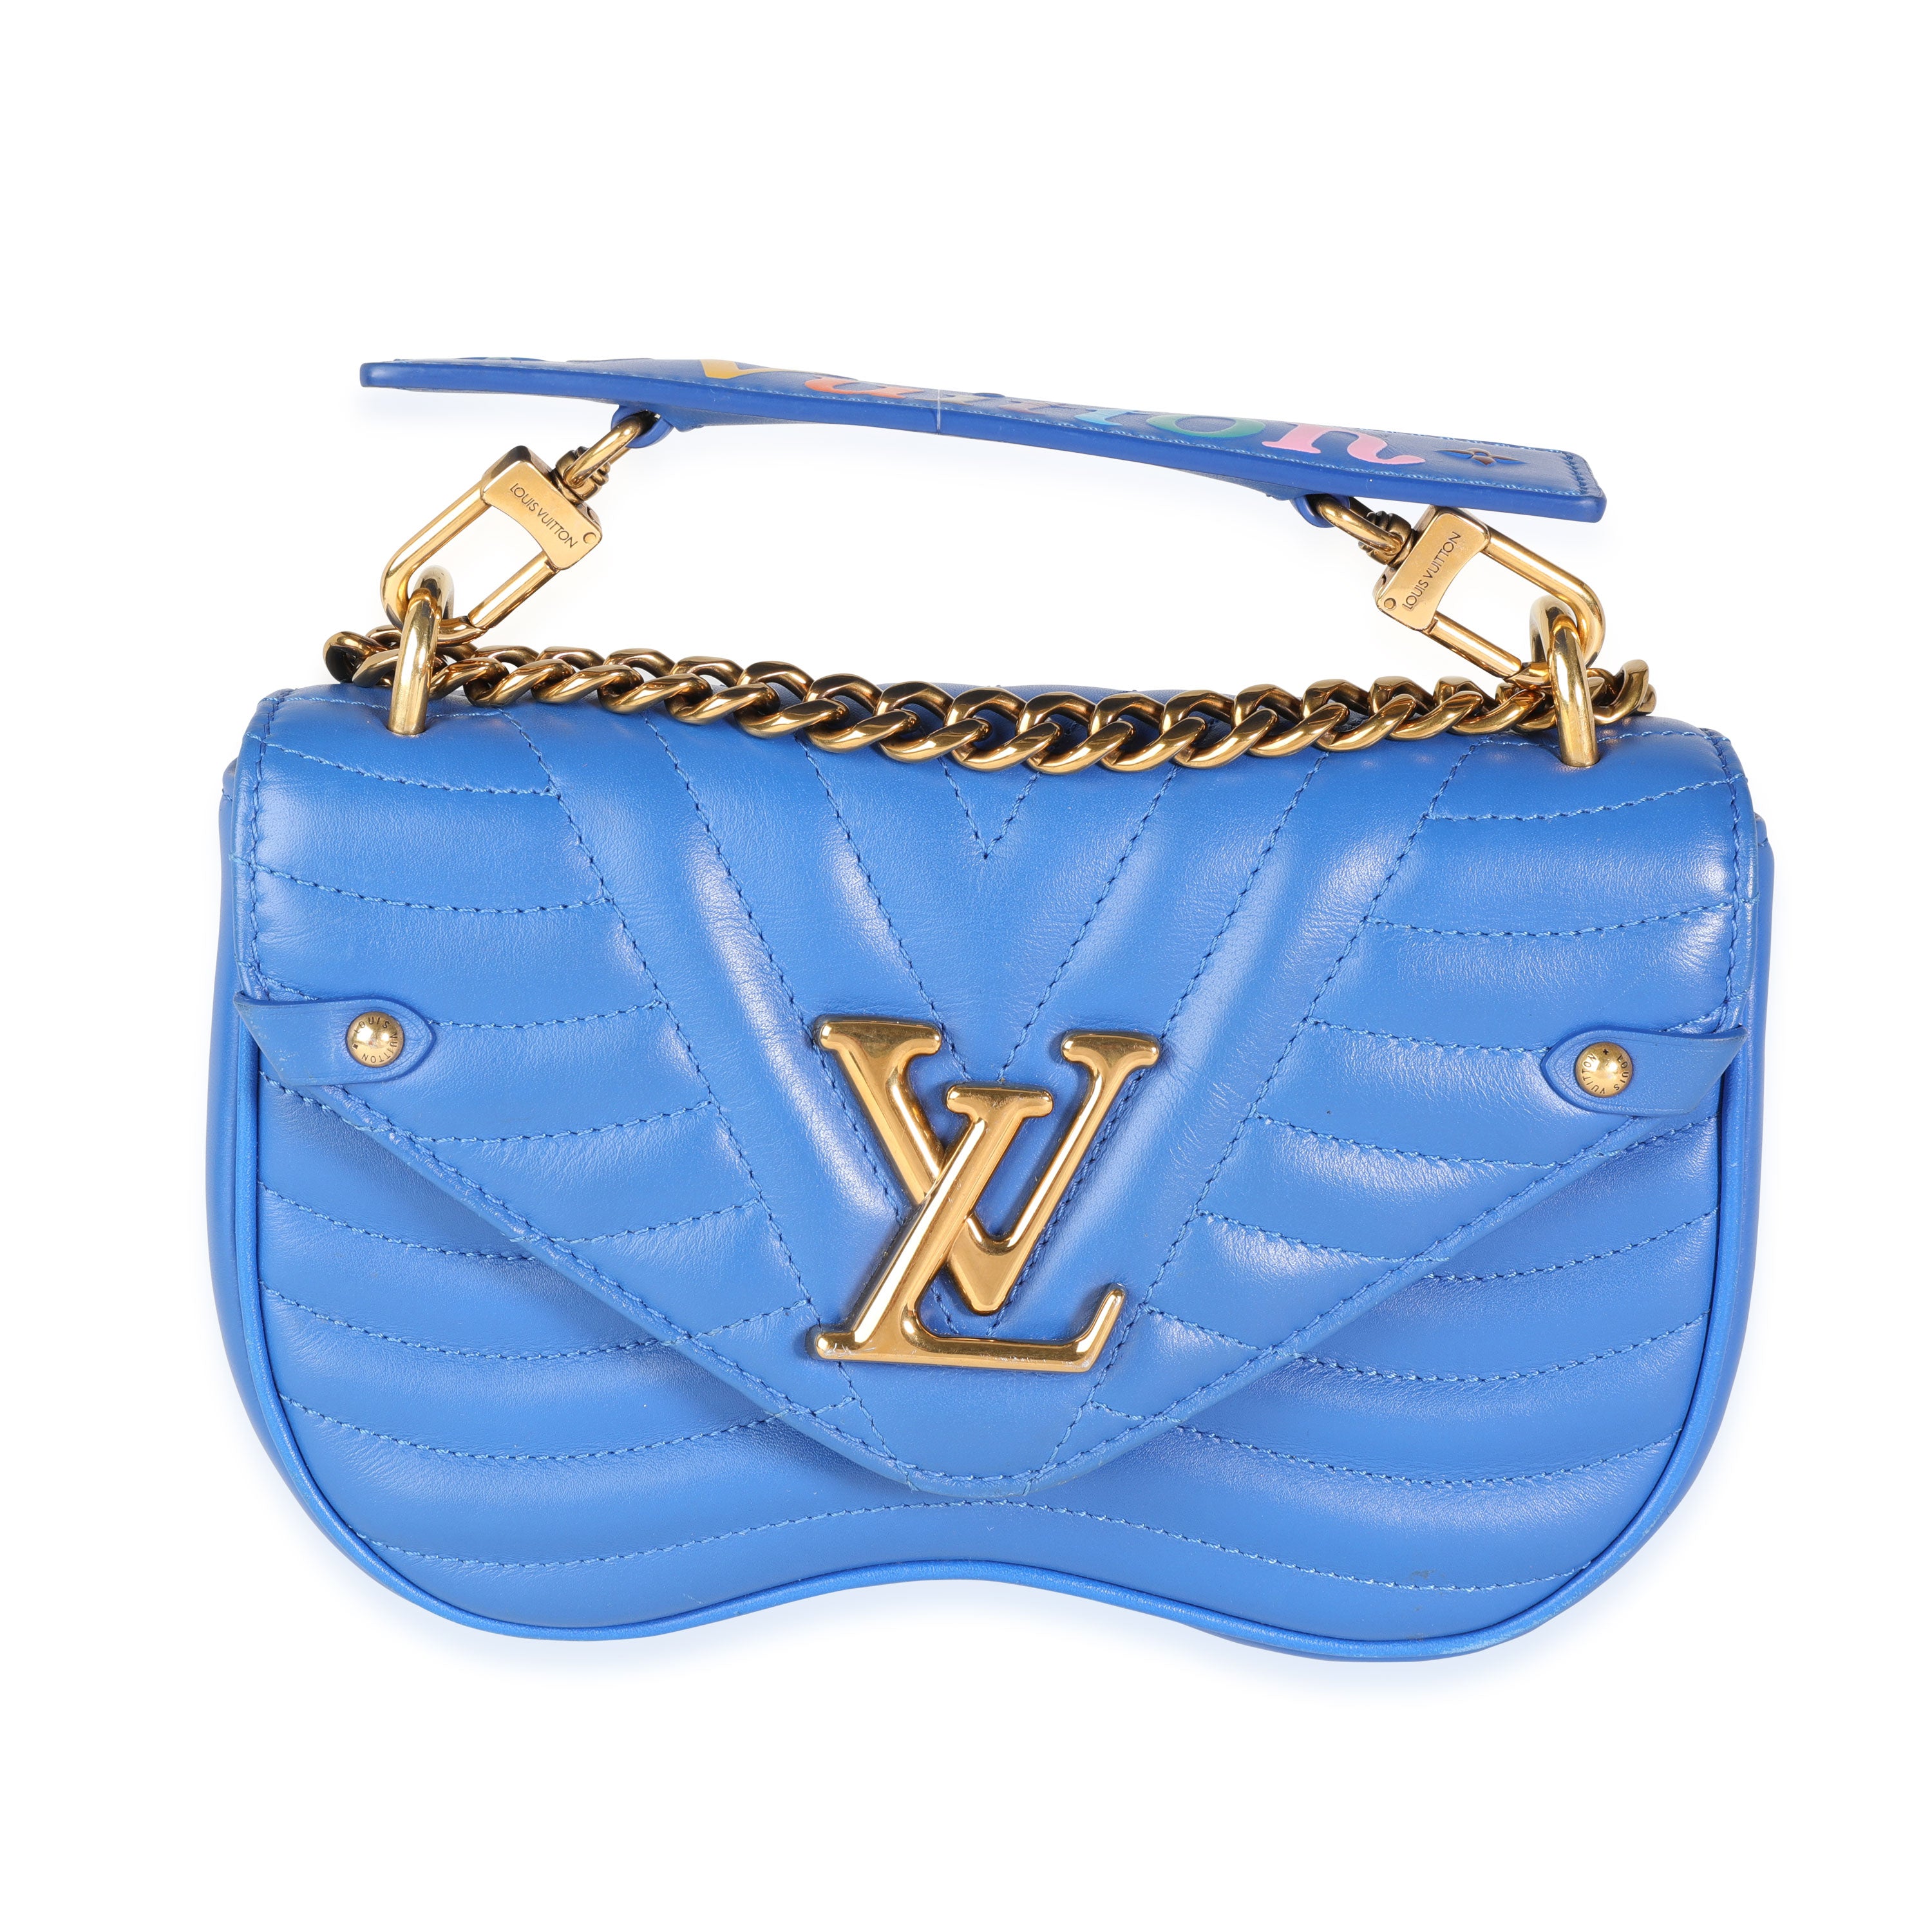 Louis Vuitton Blue Neon Leather New Wave Chain Bag PM